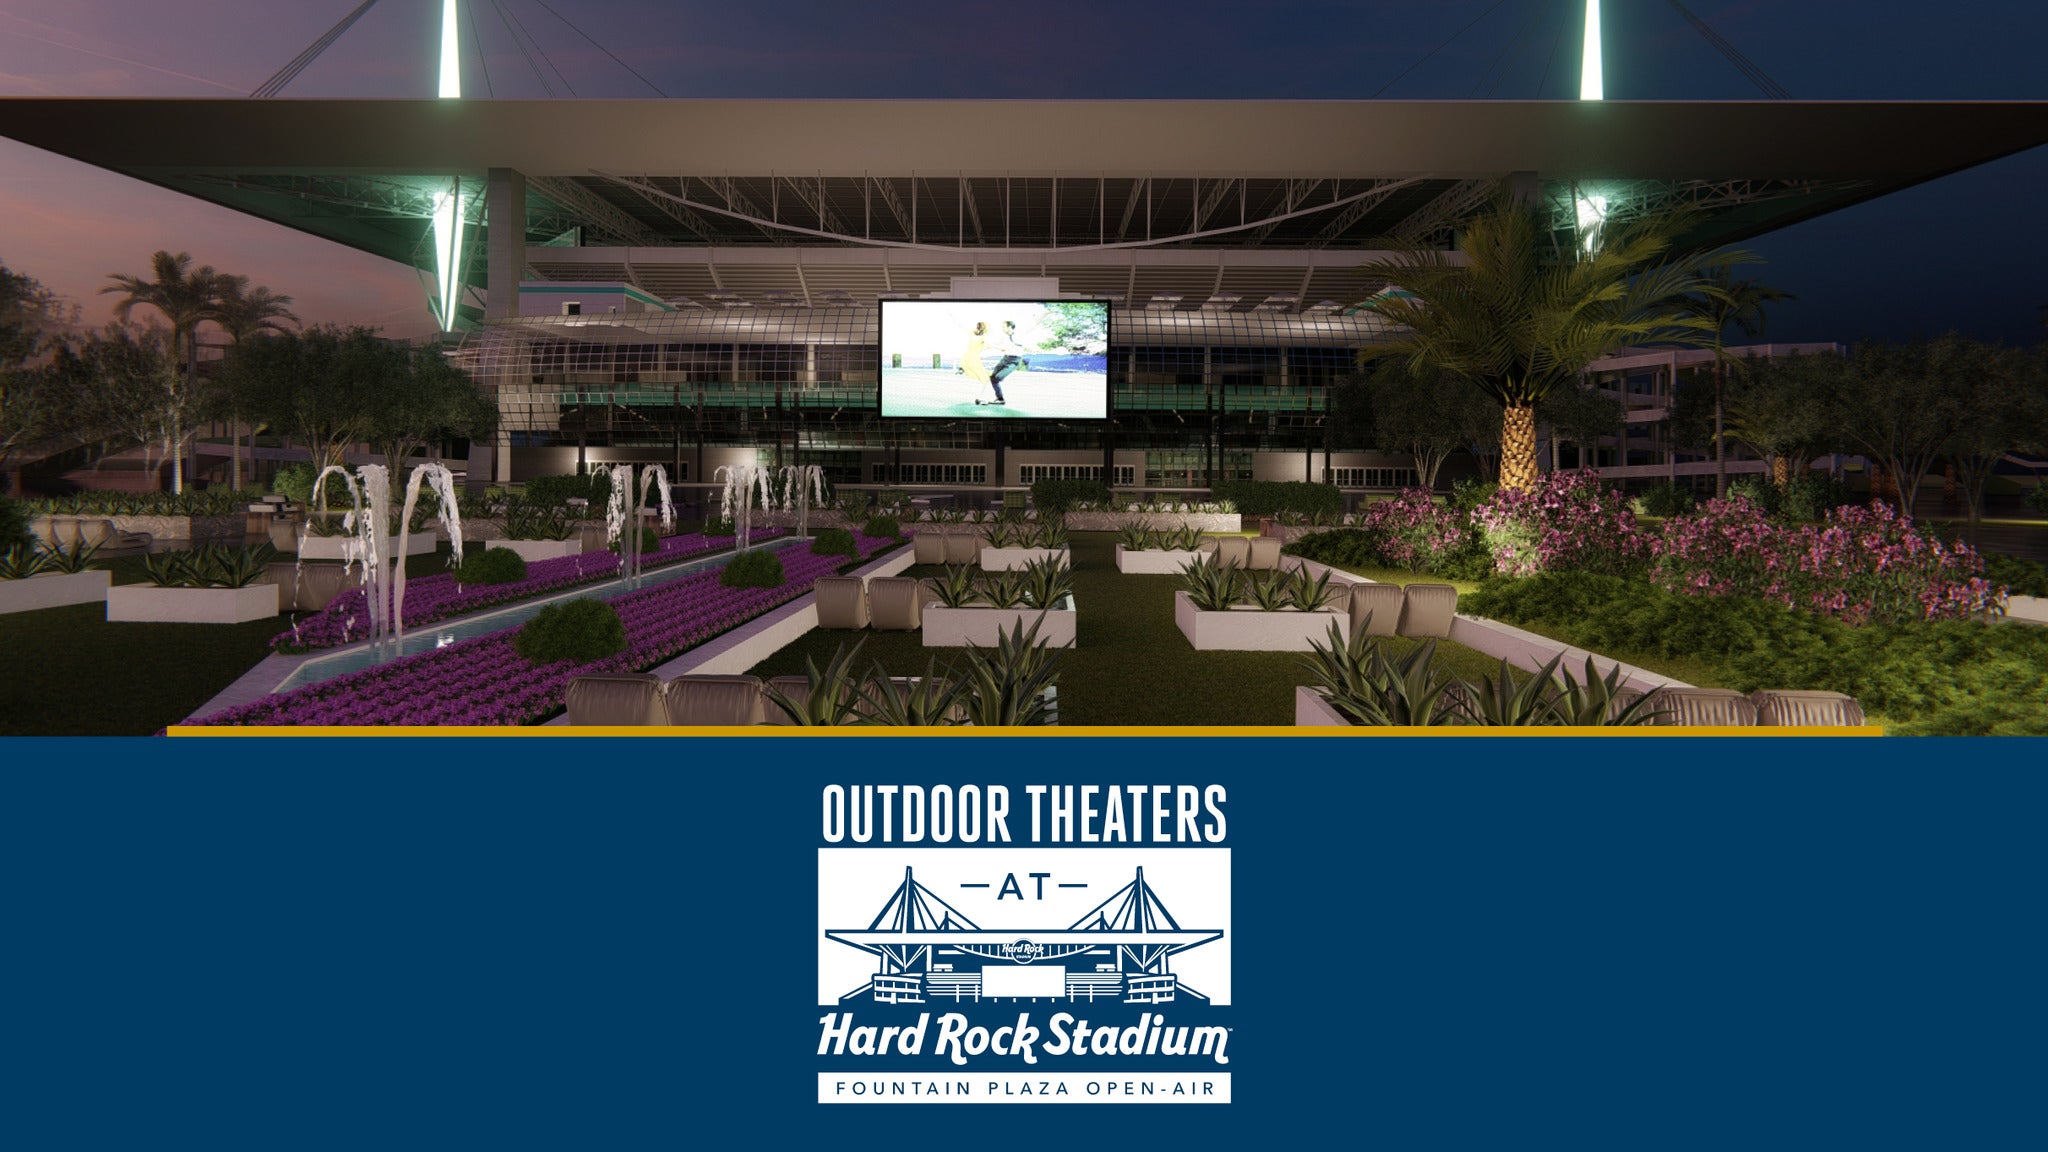 Fountain Plaza Theater: Despicable Me 3 in Miami promo photo for Hard Rock Stadium Members presale offer code